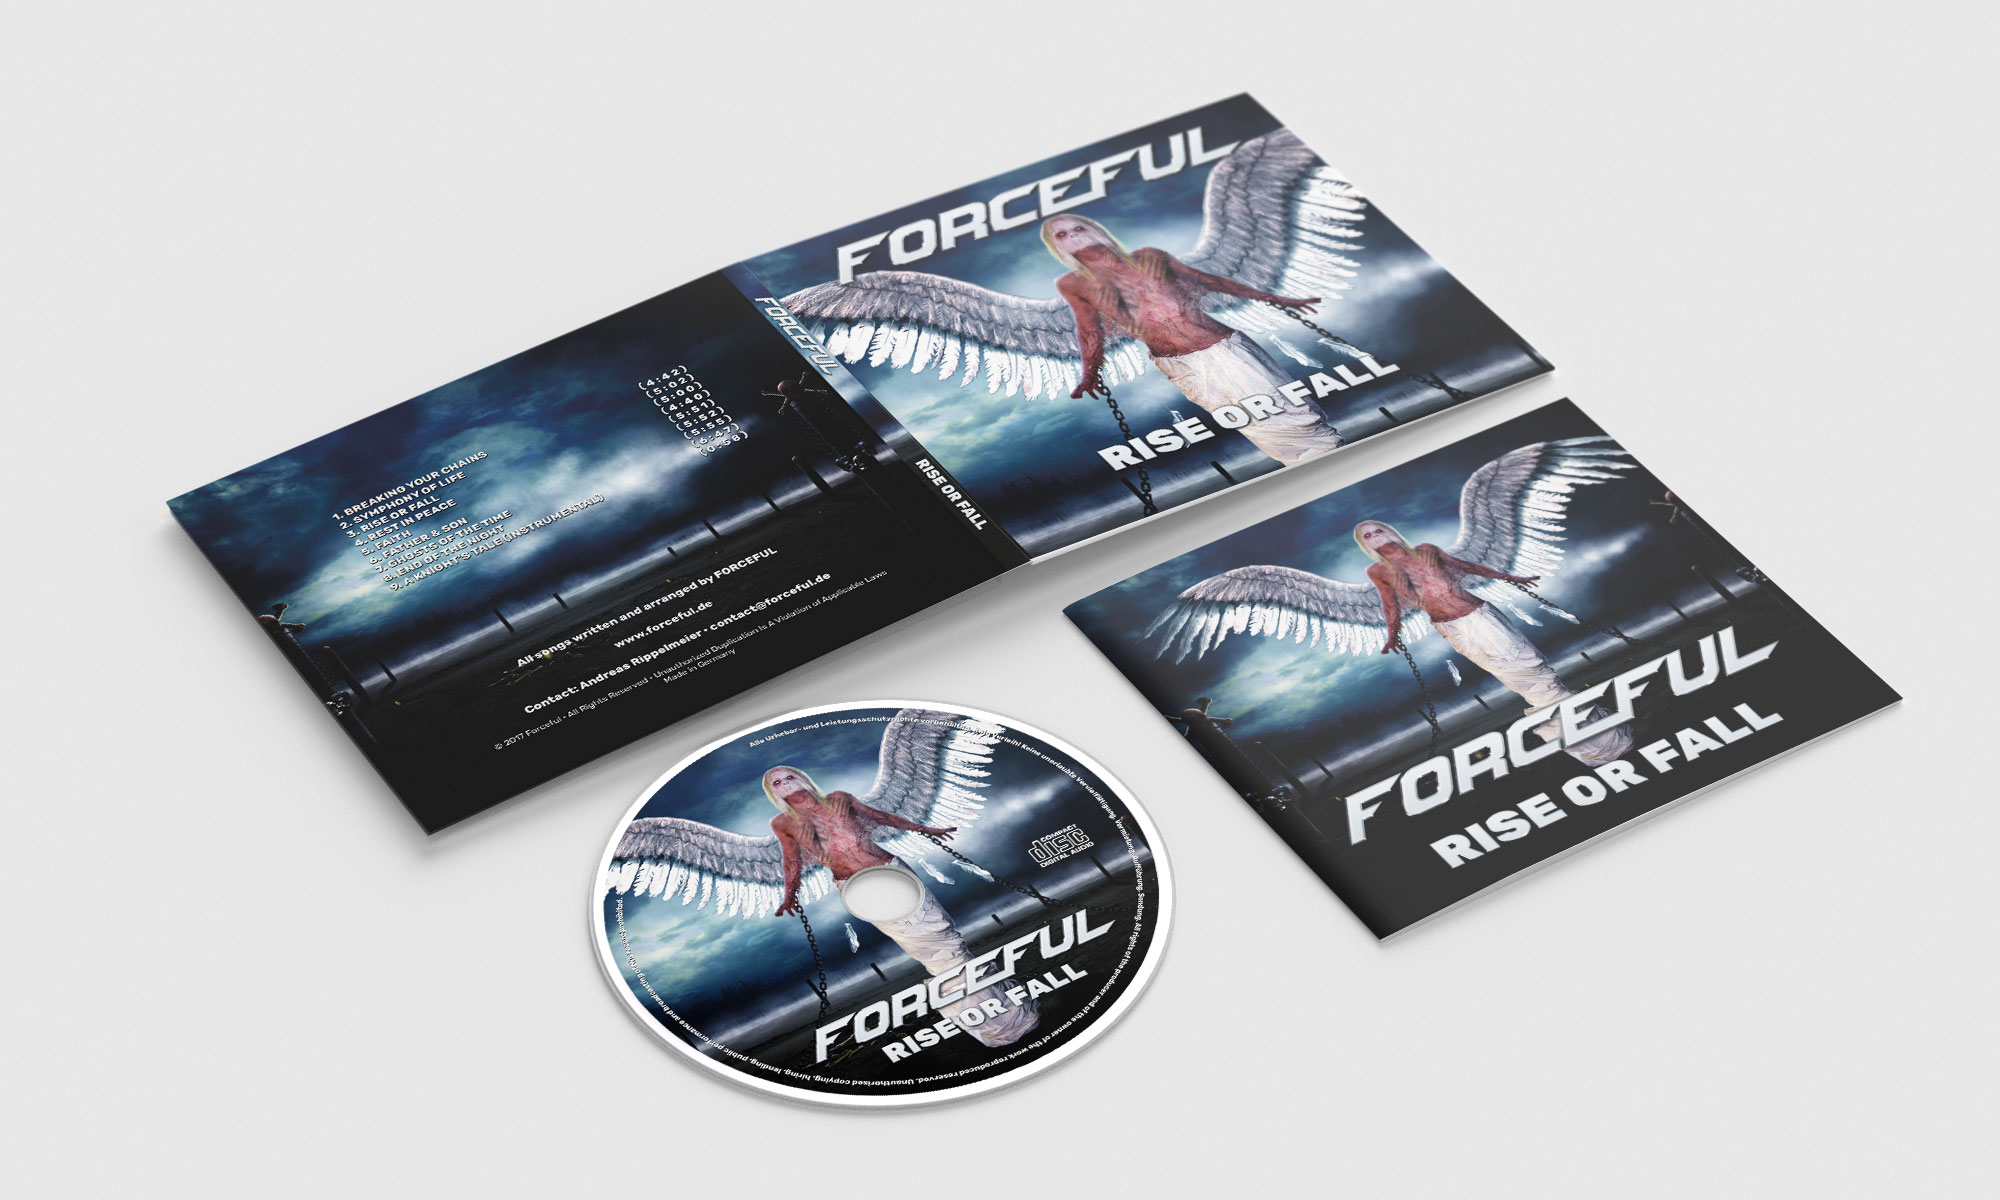 Forceful - CD Digipak & Booklet